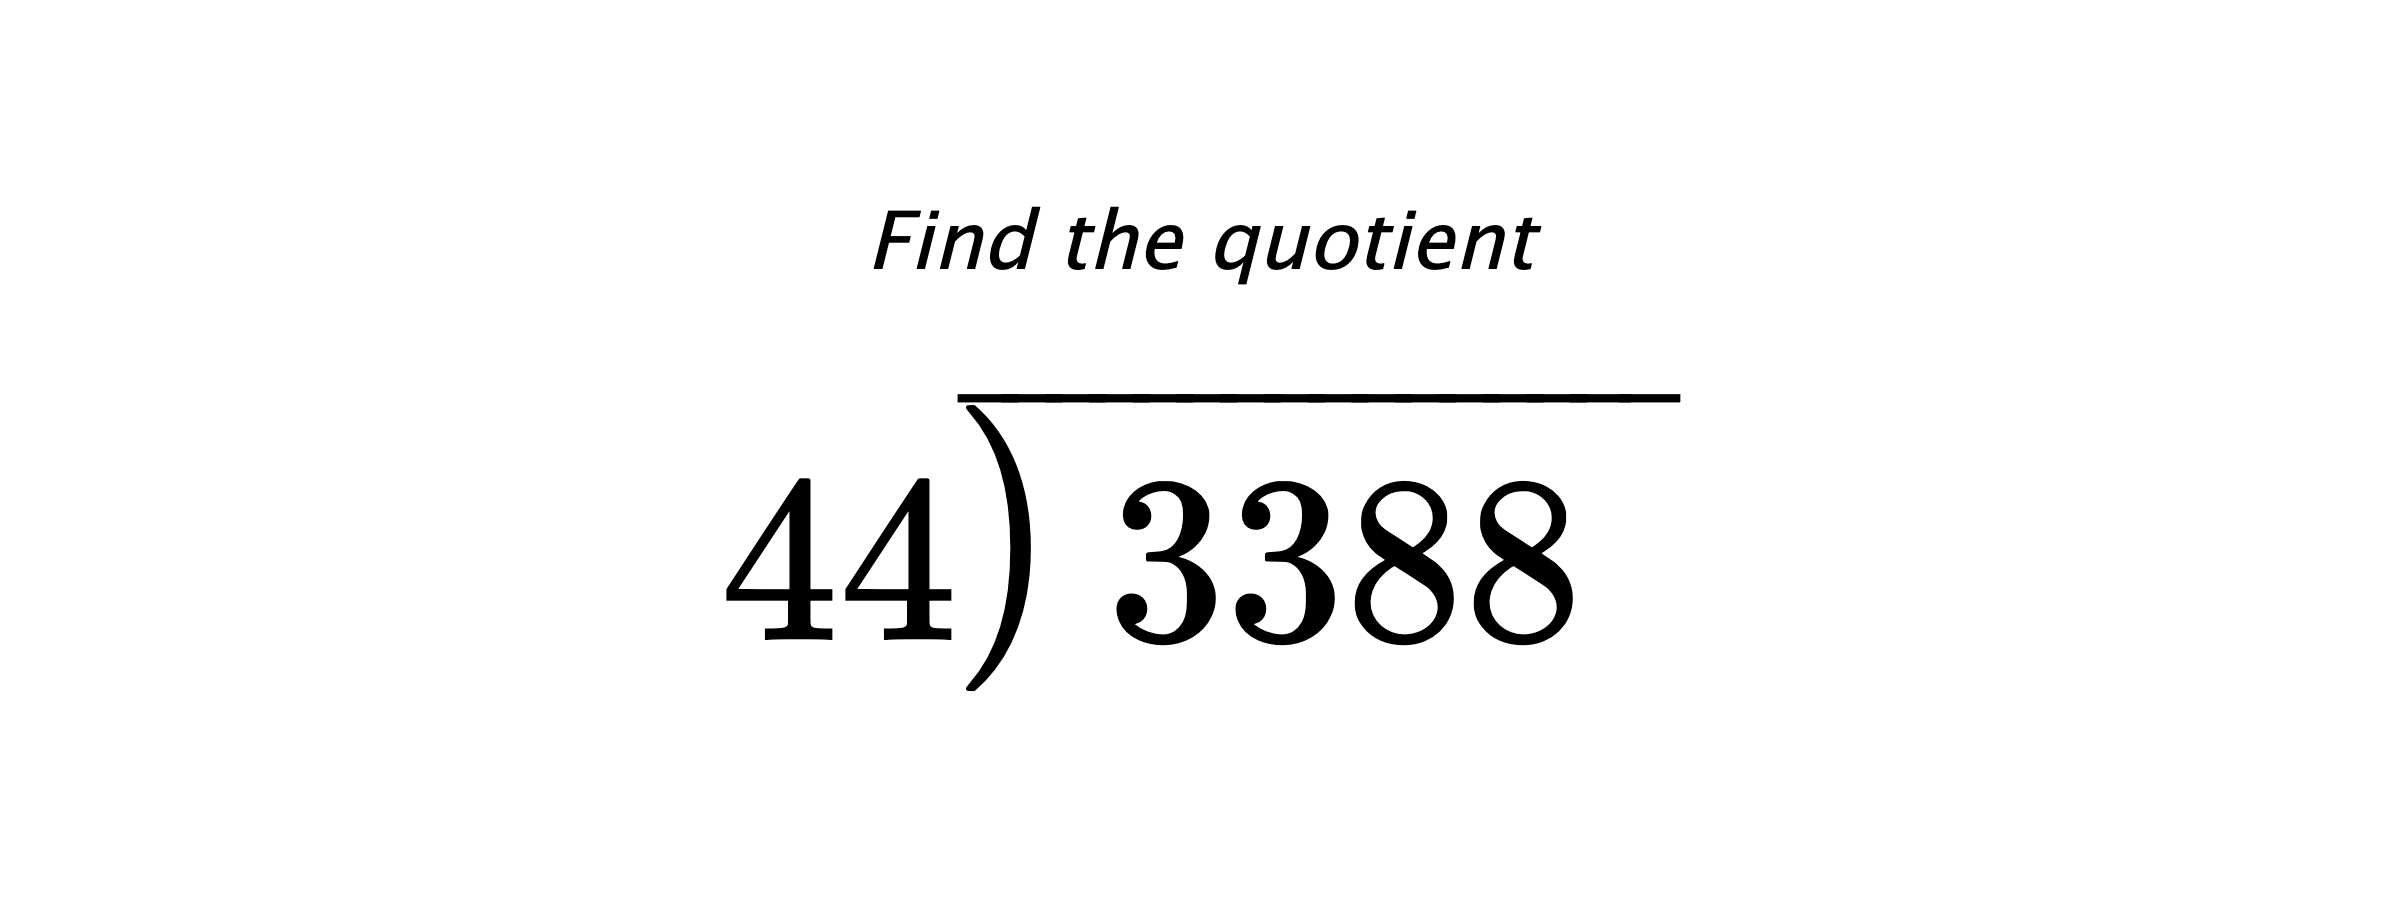 Find the quotient $ 44{\overline{\smash{\raise.3ex\hbox{$\big)$}}\,3388\phantom{)}}} $